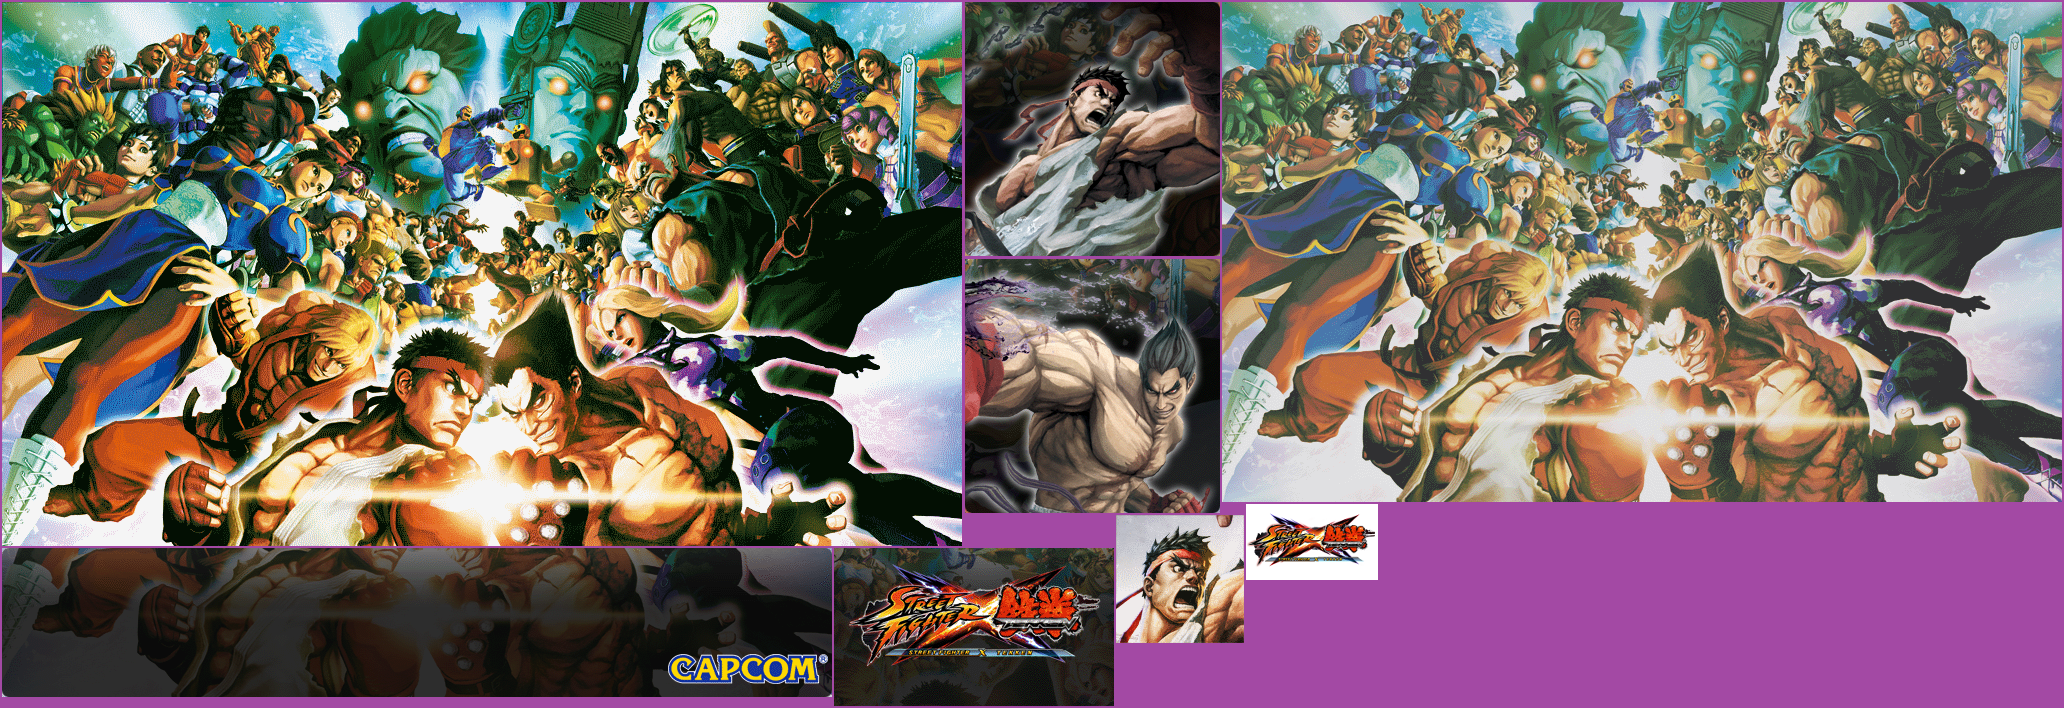 Street Fighter X Tekken - PS Vita Icons & LiveArea